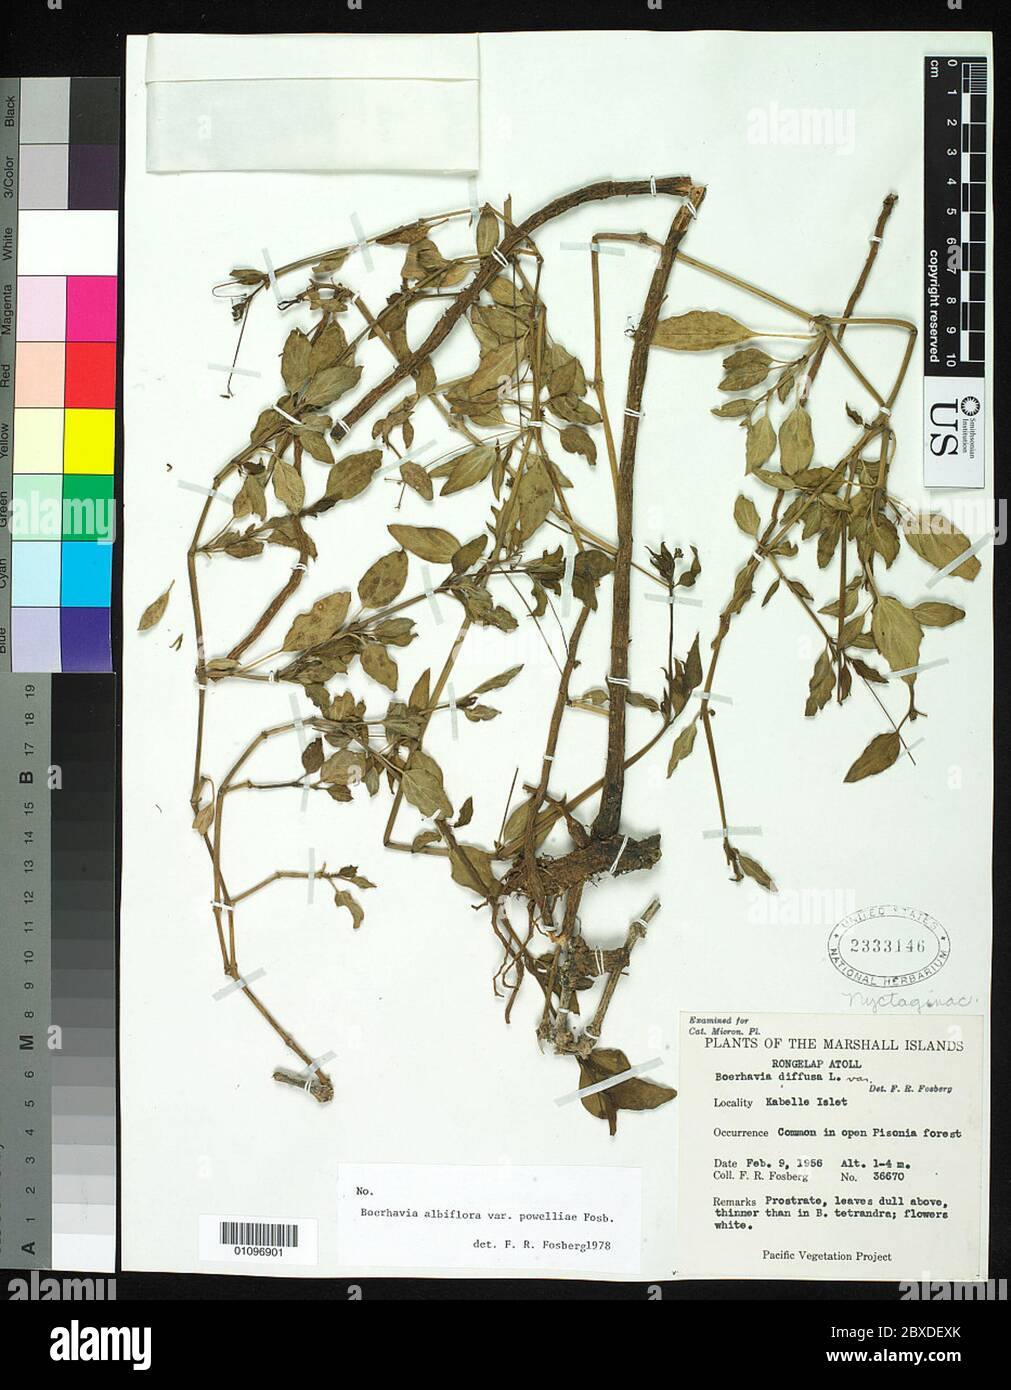 Boerhavia albiflora var powelliae Fosberg Boerhavia albiflora var powelliae Fosberg. Stock Photo